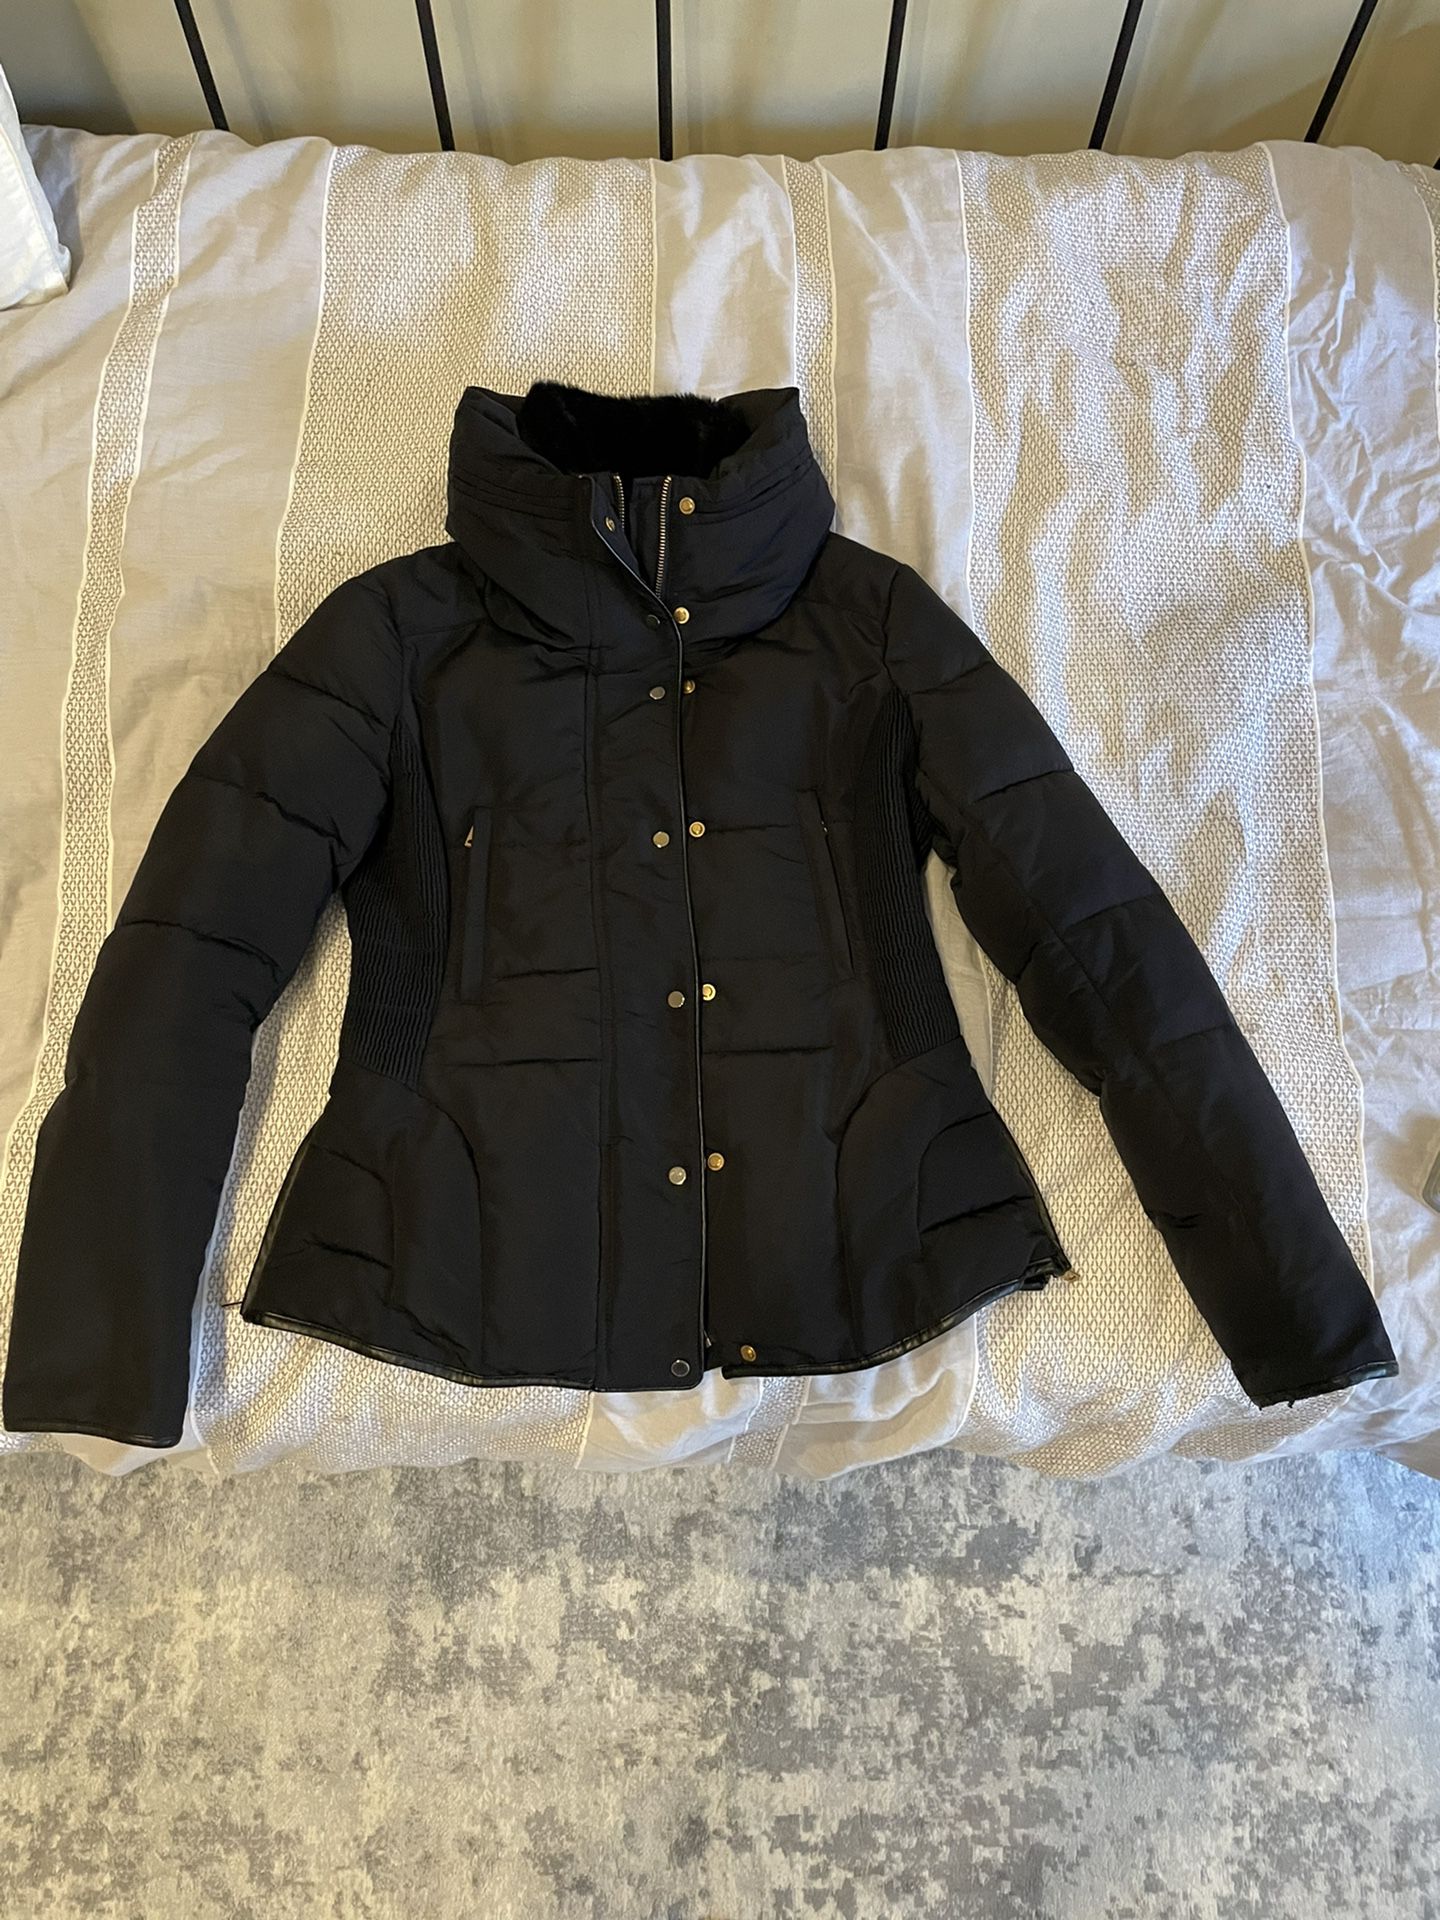 Zara Shirt Jacket 